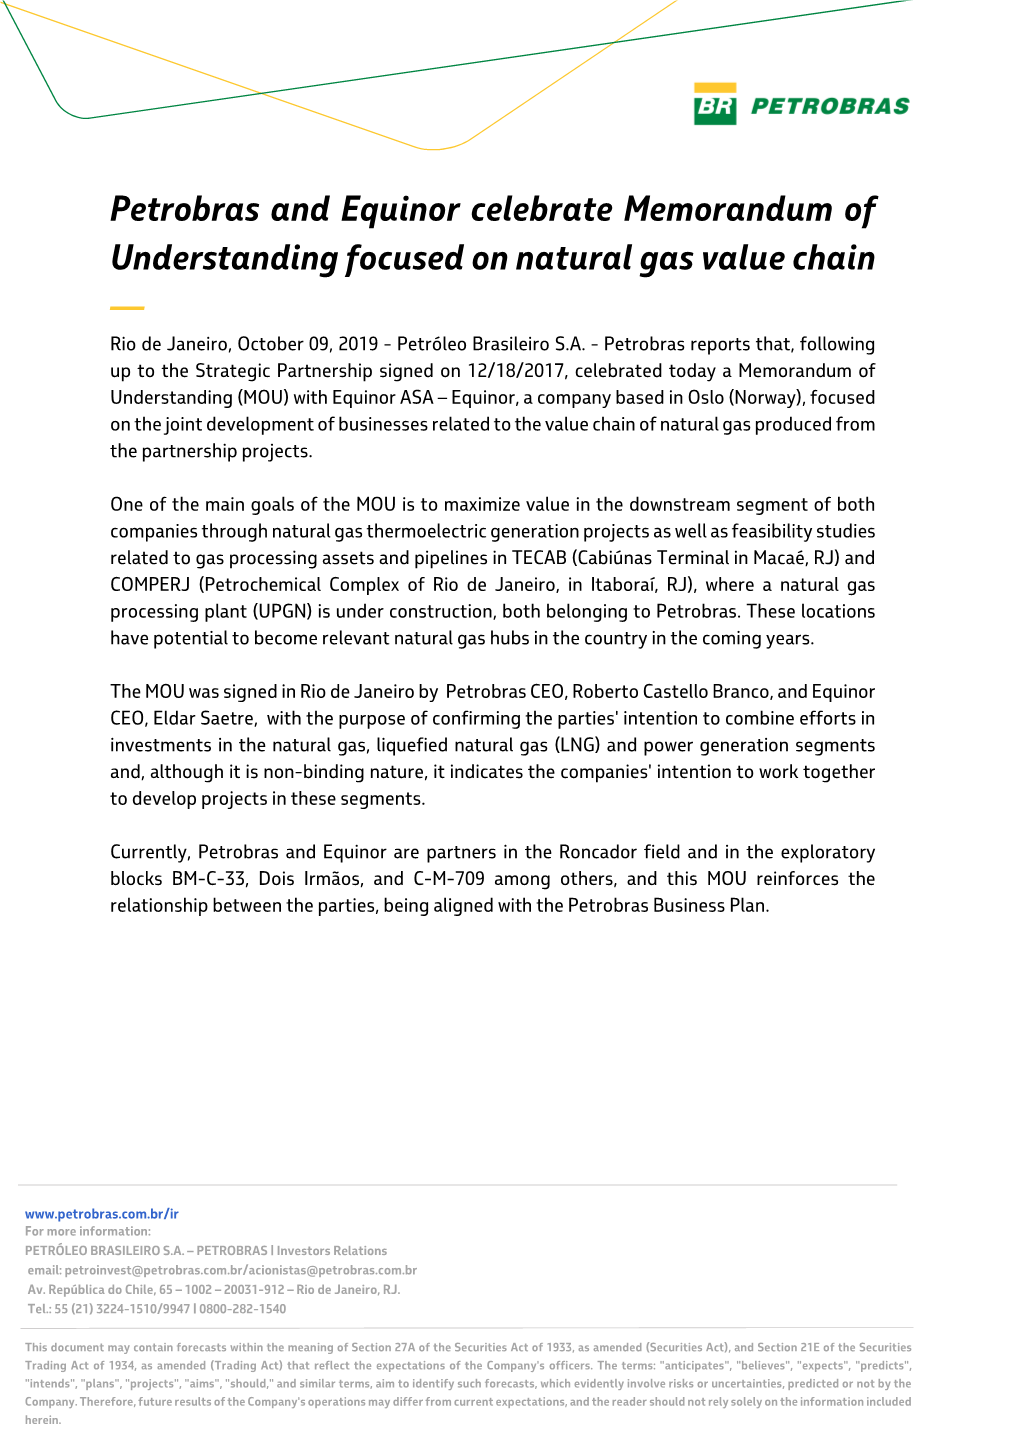 Petrobras and Equinor Celebrate Memorandum of Understanding Focused on Natural Gas Value Chain — Rio De Janeiro, October 09, 2019 - Petróleo Brasileiro S.A